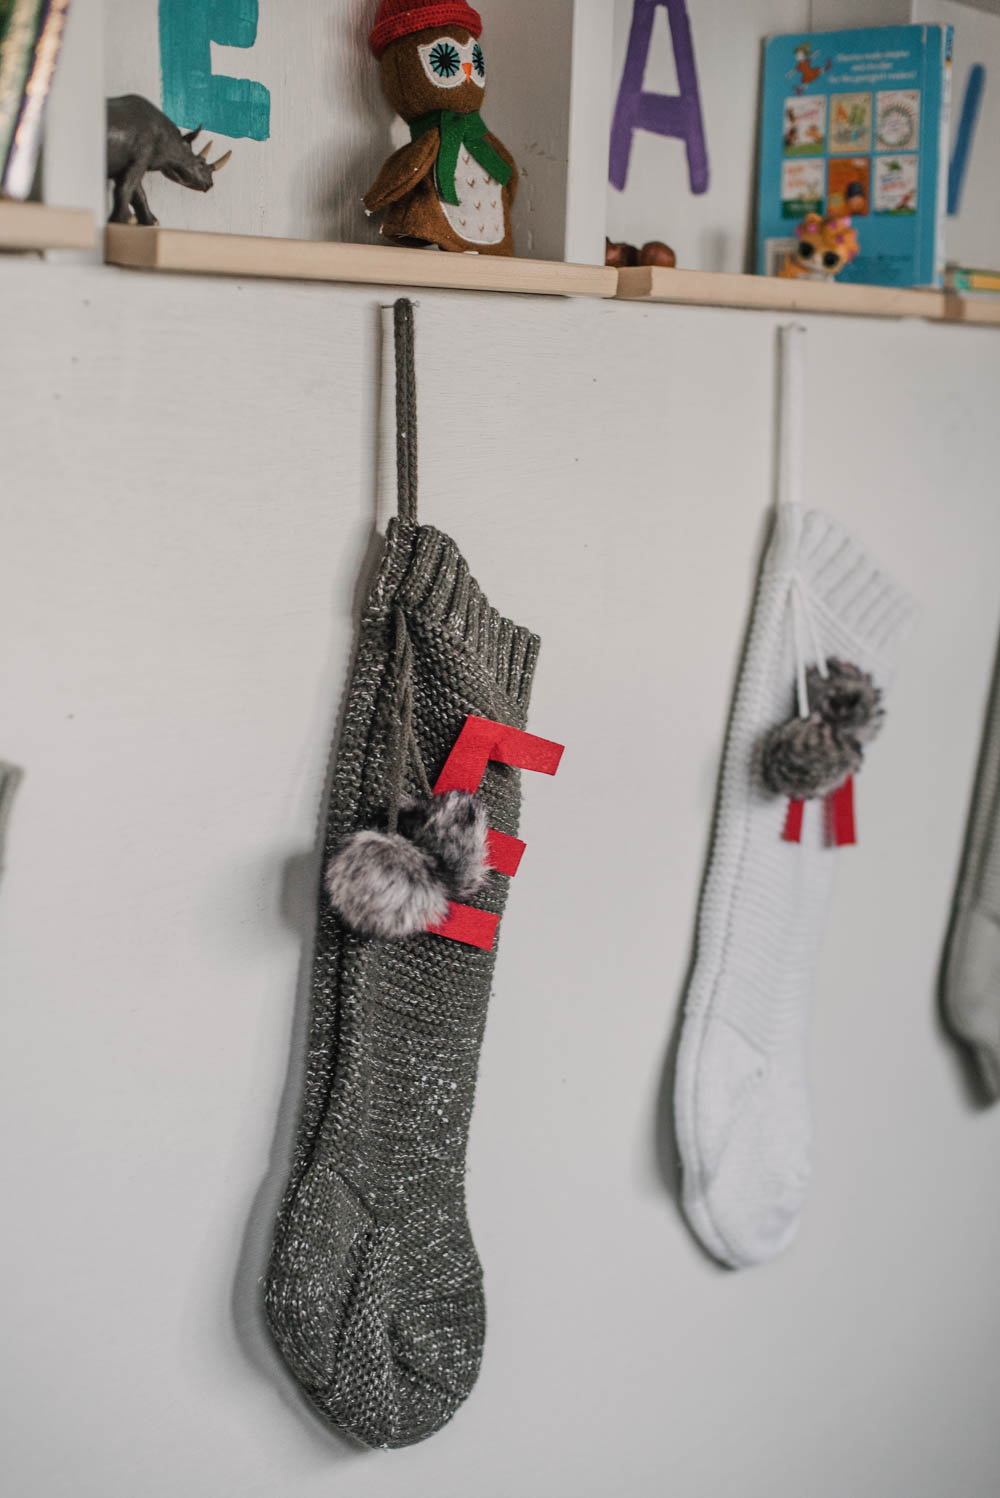 Felt letters on knit stockings